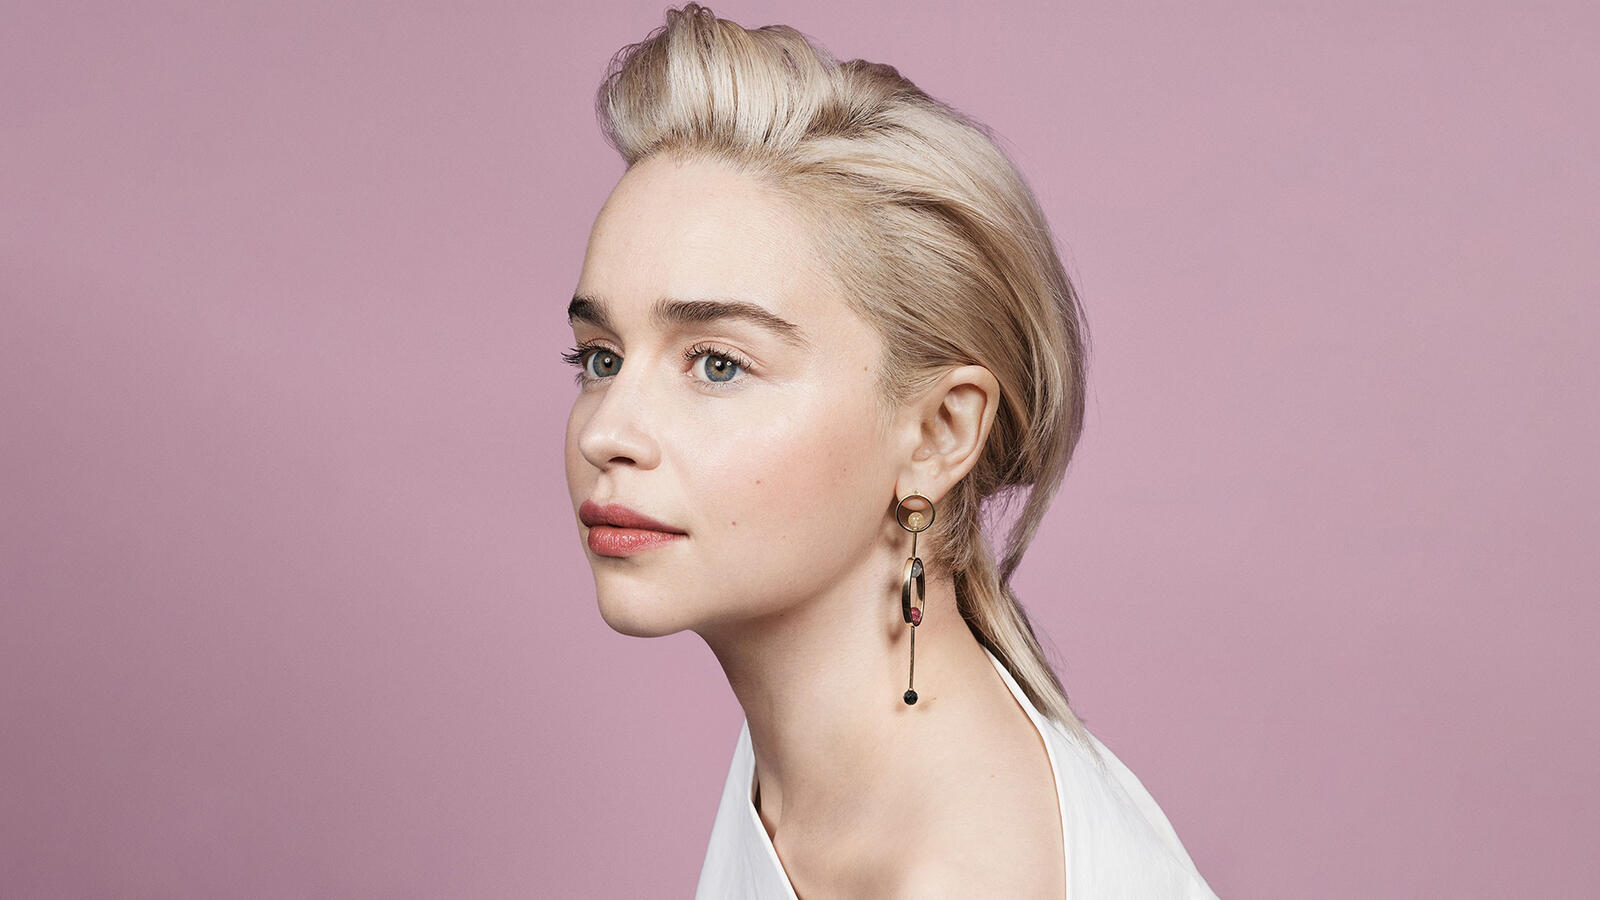 Wallpapers Emilia Clarke celebrities blonde hair on the desktop